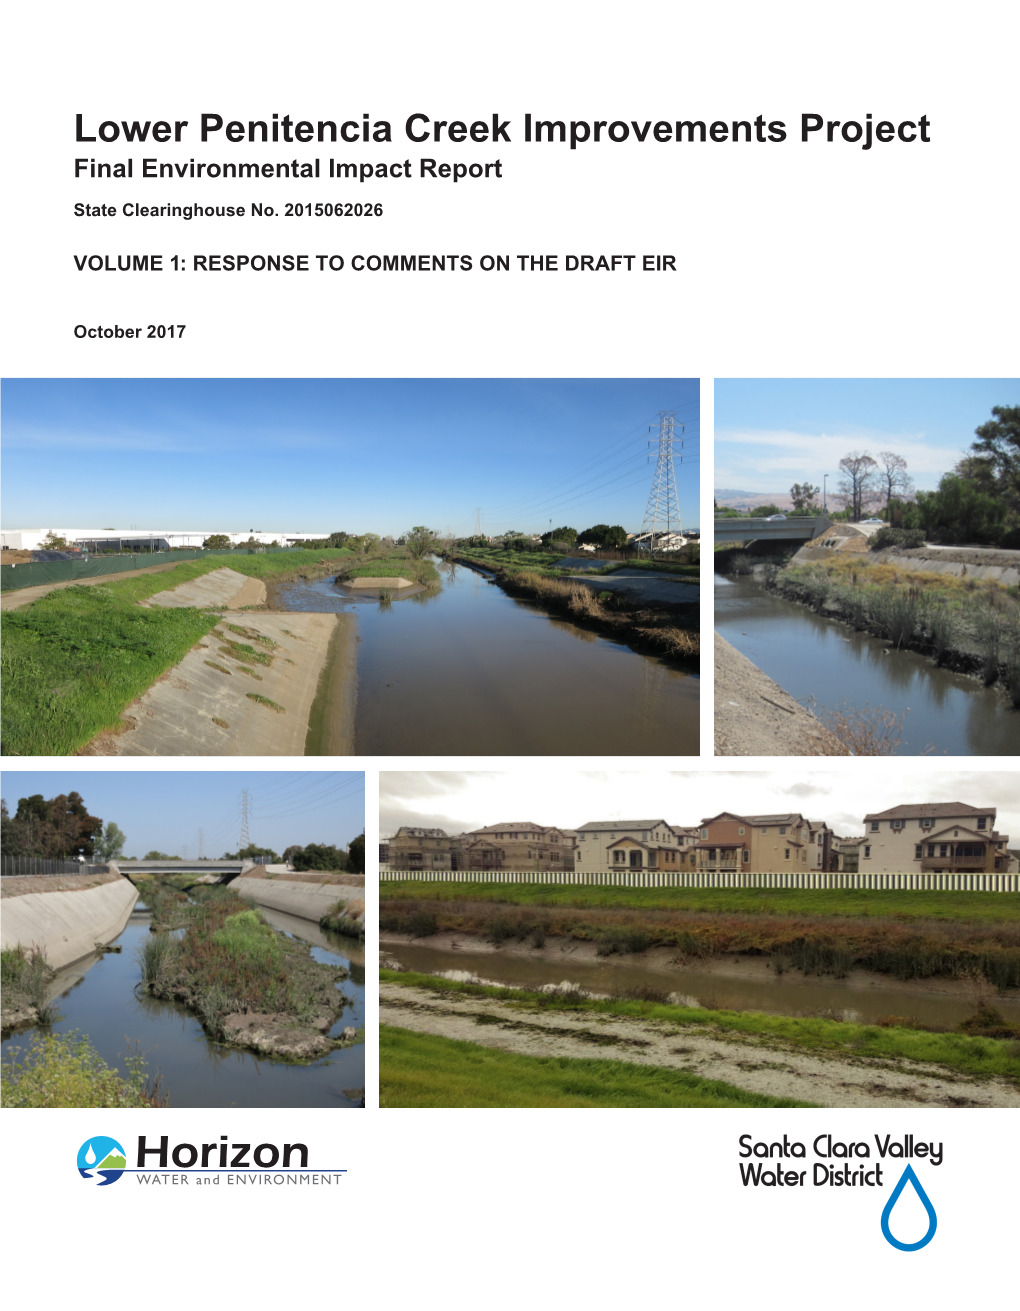 Lower Penitencia Creek Improvements Project Final Environmental Impact Report